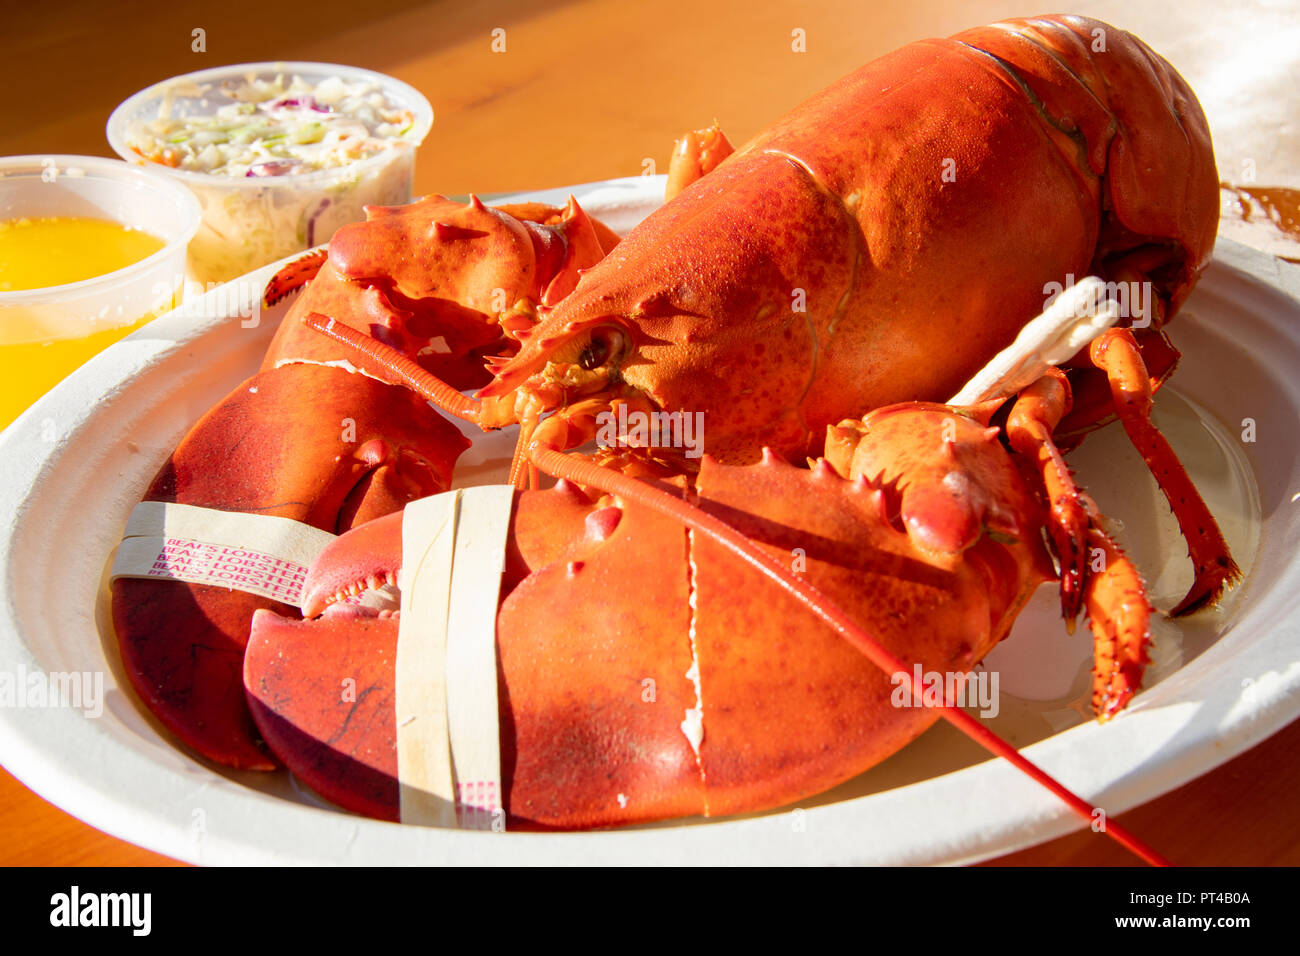 Beal's Lobster Restaurant Pier, Southwest Harbor, Maine, USA Banque D'Images